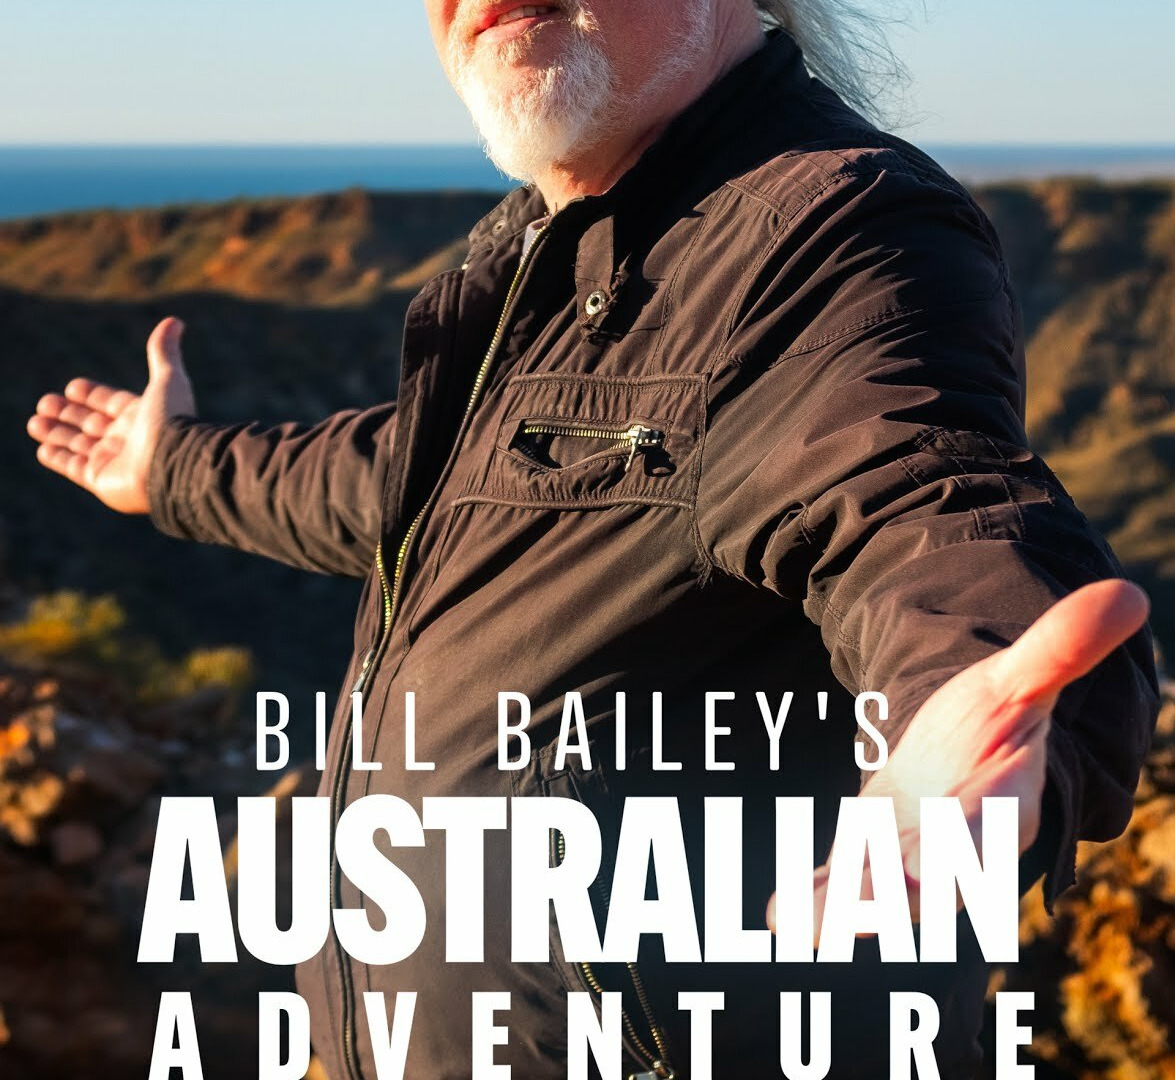 Show Bill Bailey's Australian Adventure